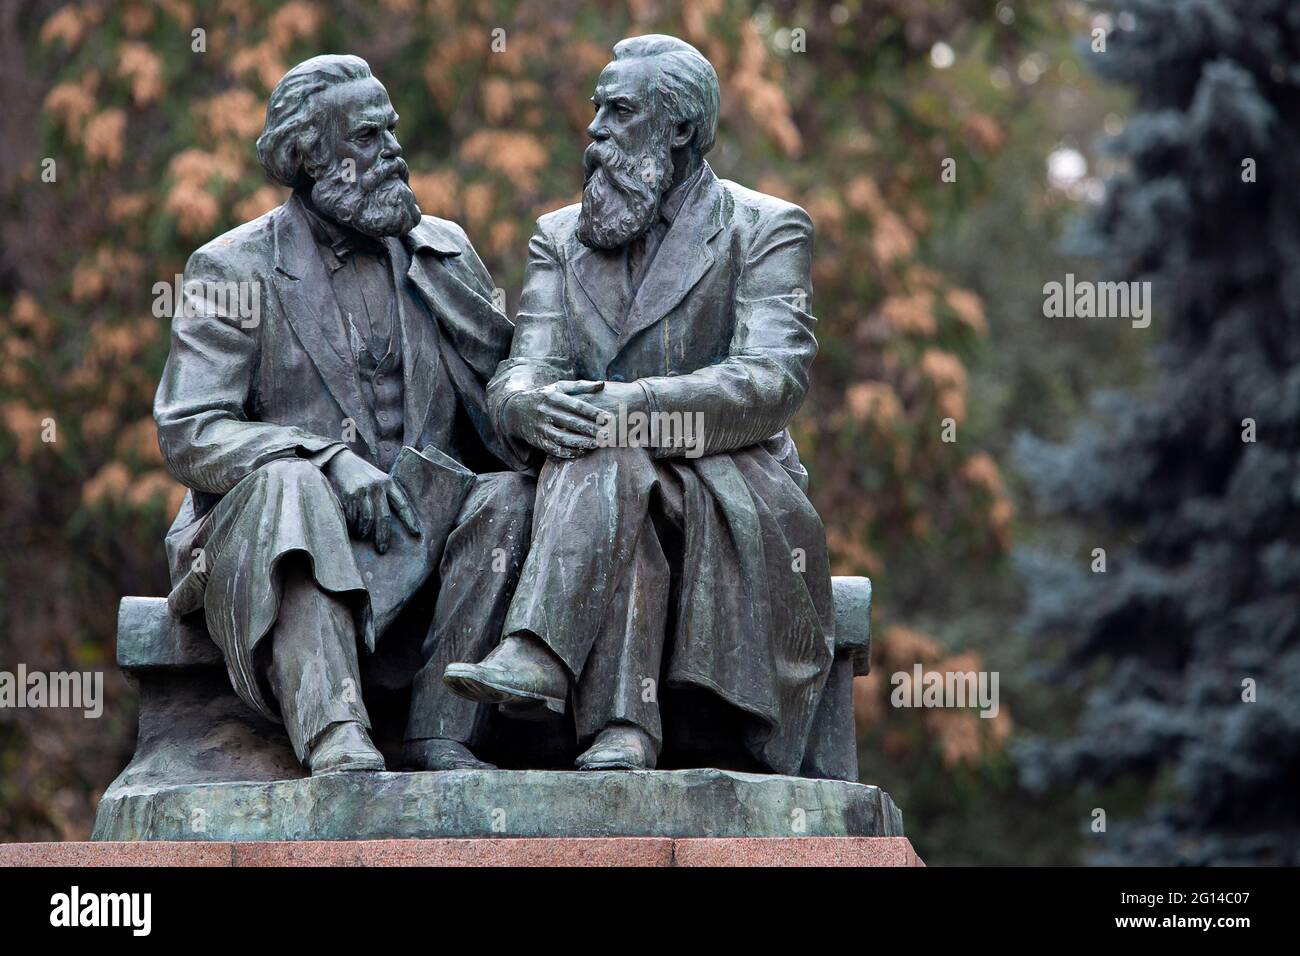 Monument from Soviet era, representing Karl Marx and Friedrich Engels in Bishkek, Kyrgyzstan Stock Photo